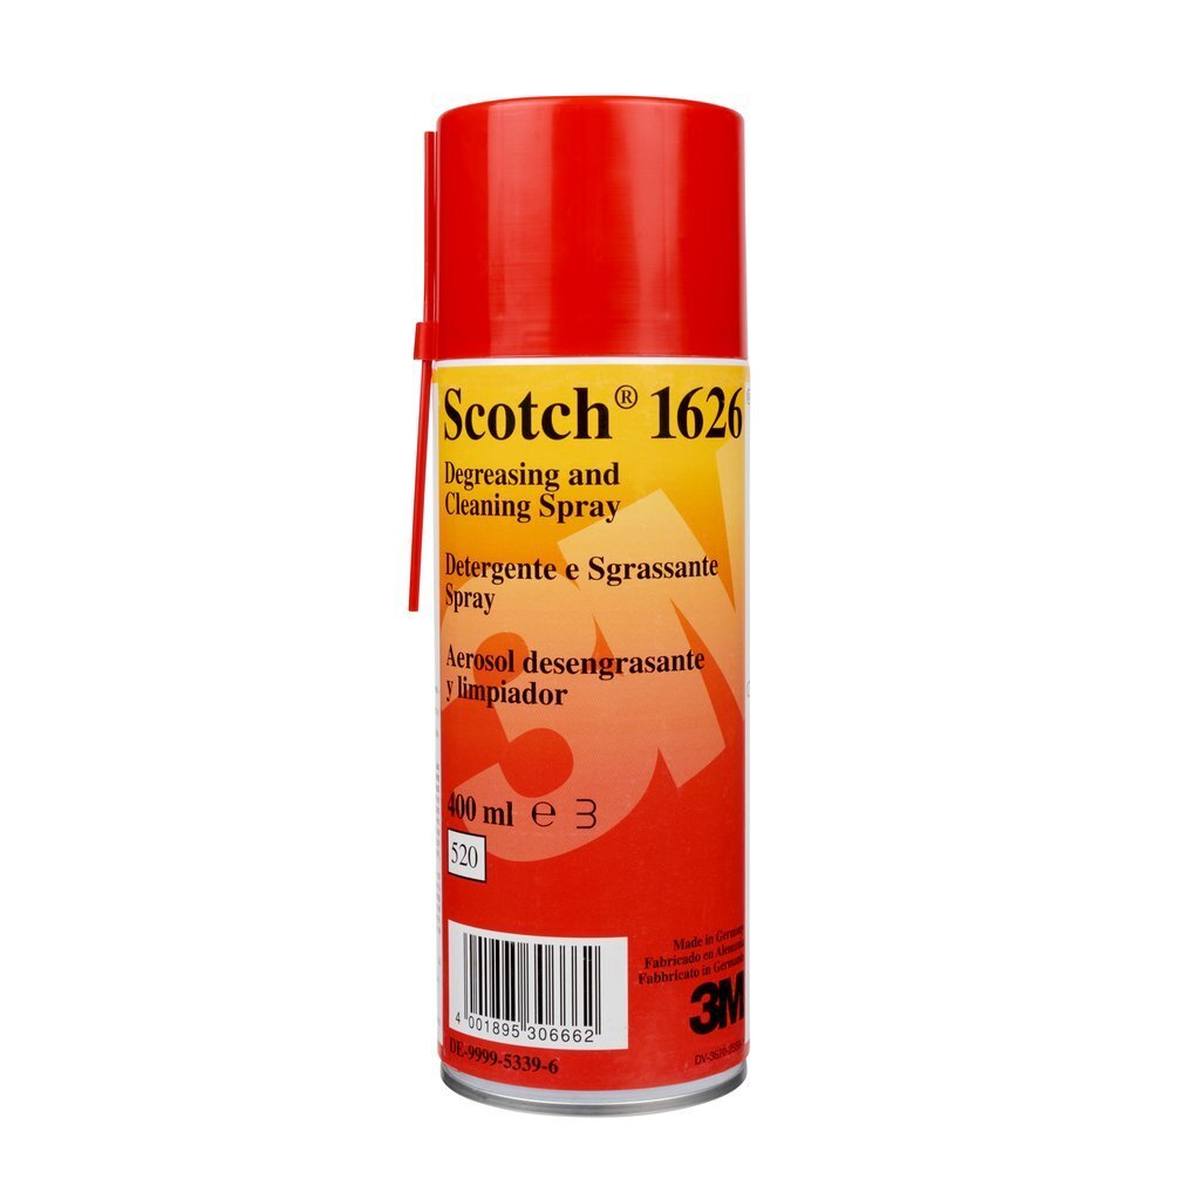 3M Scotch 1626 Reinigings- en ontvettingsspray, 400 ml